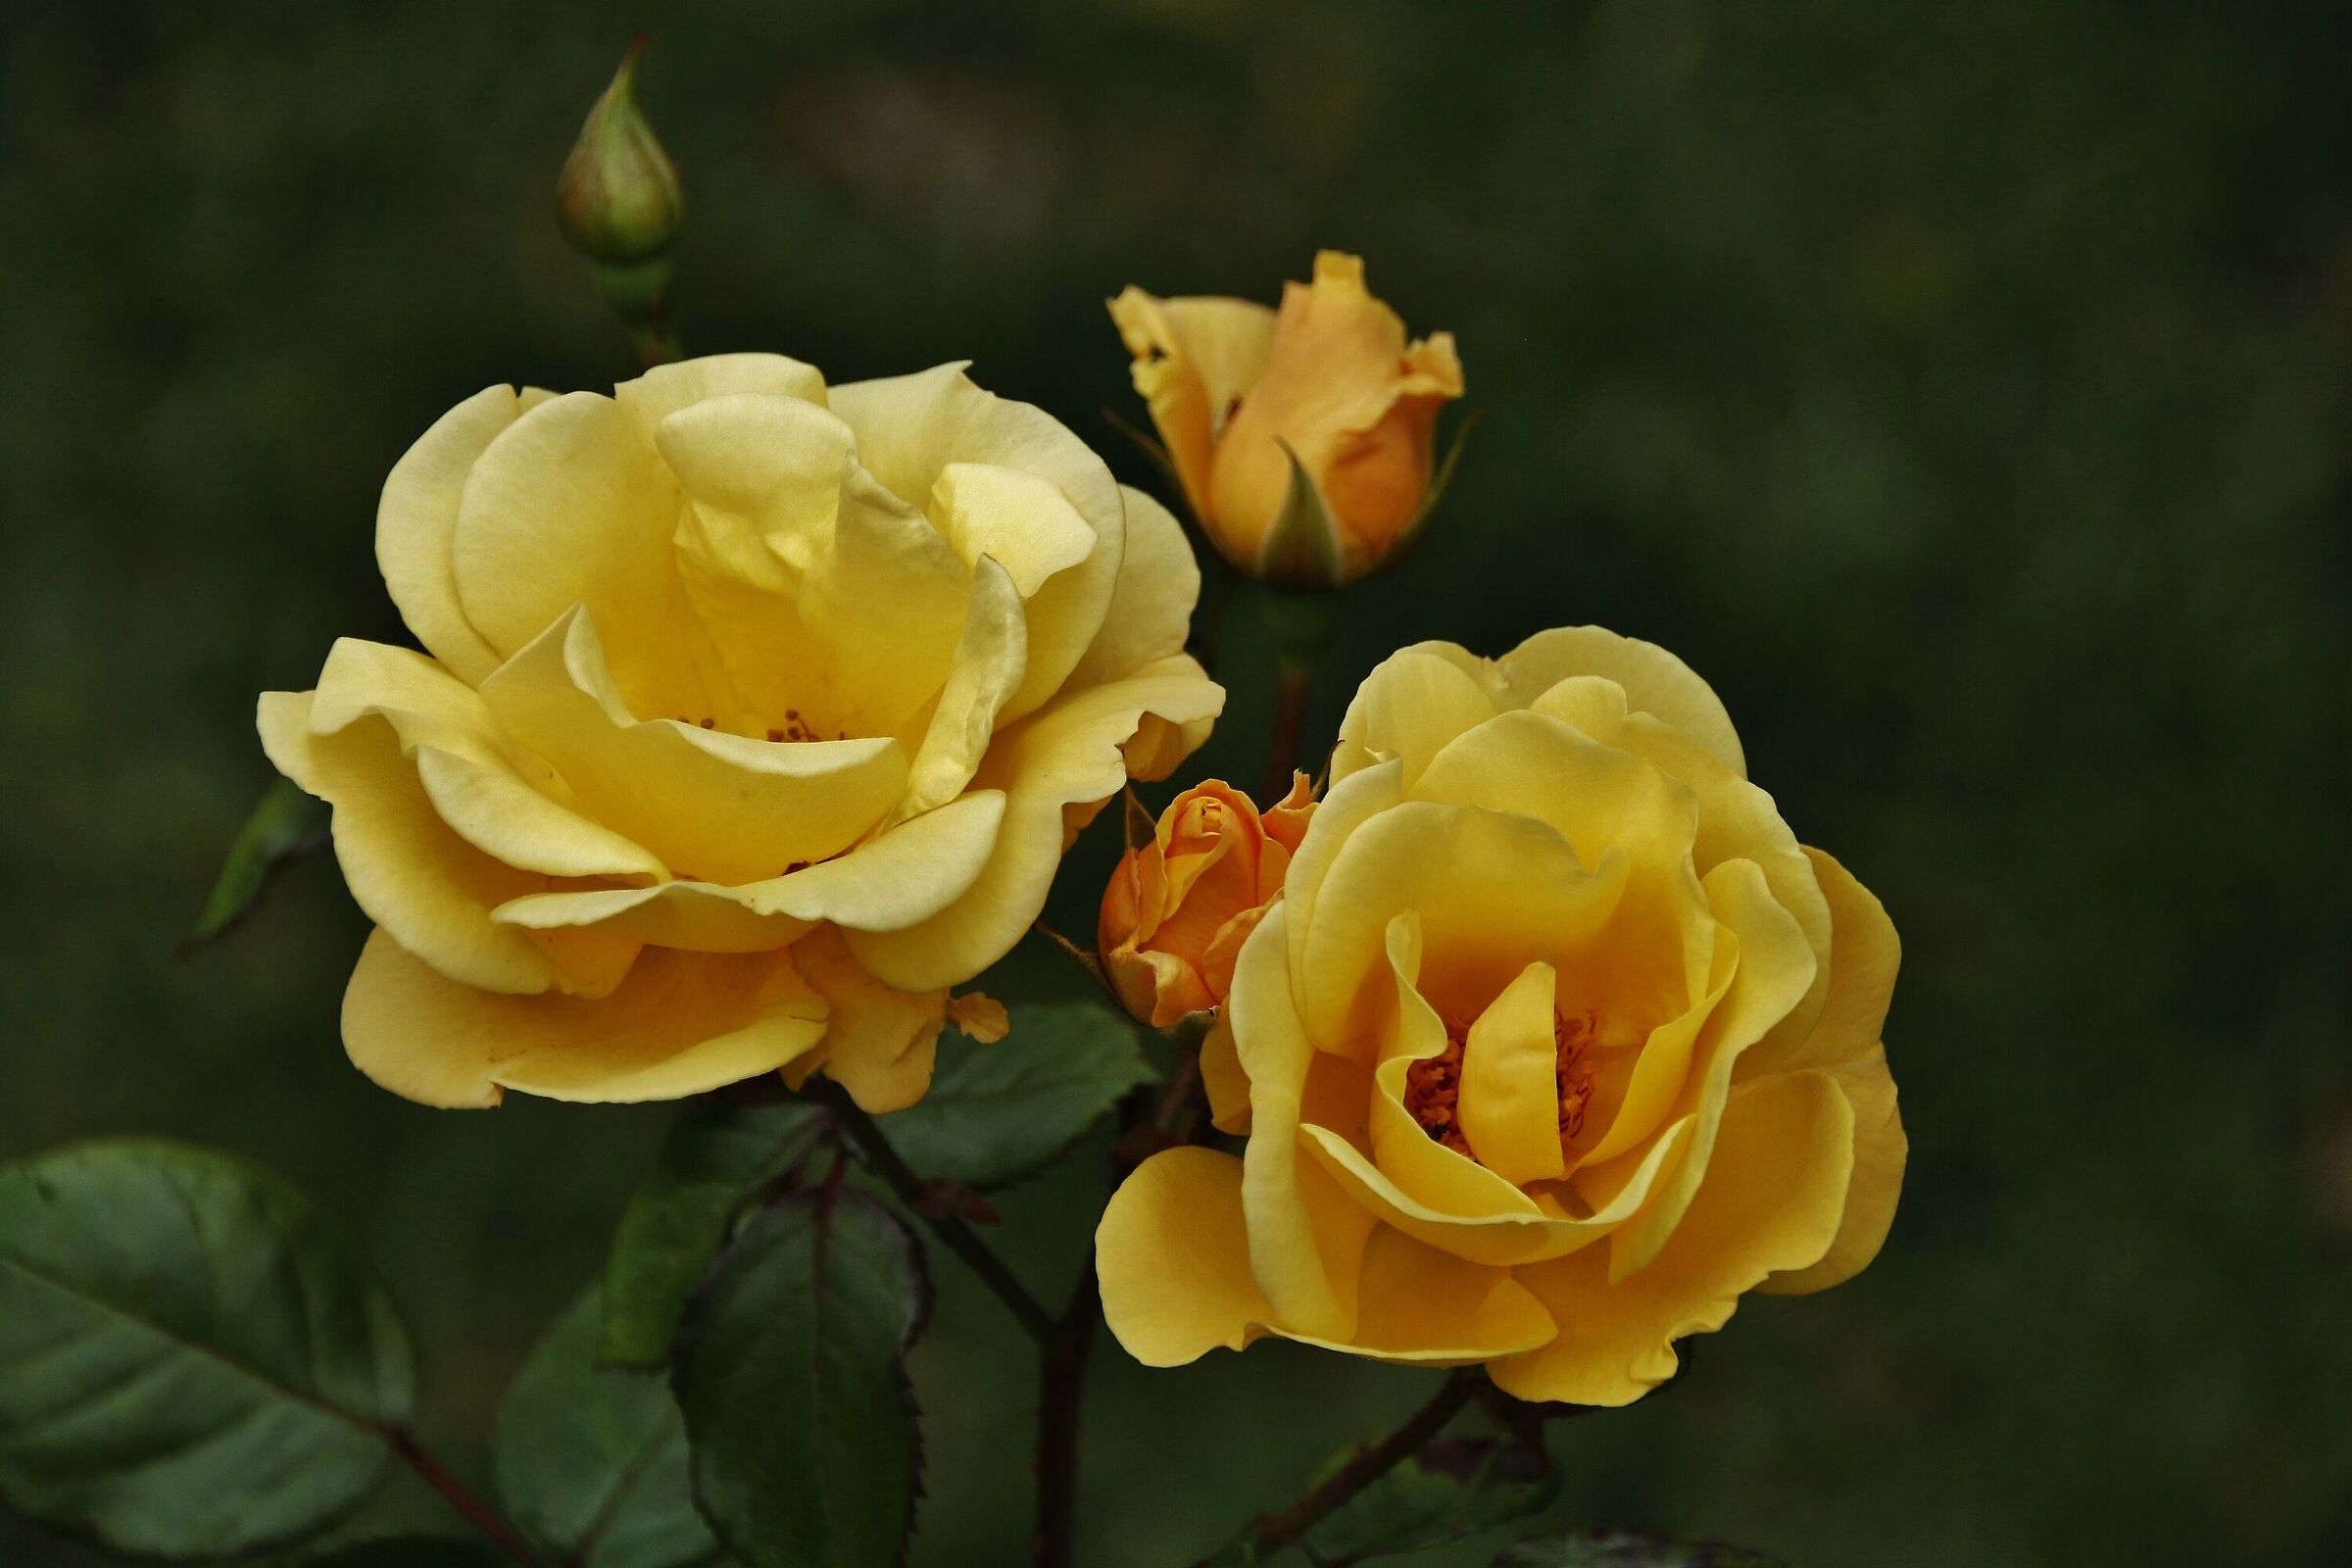 Yellow roses...